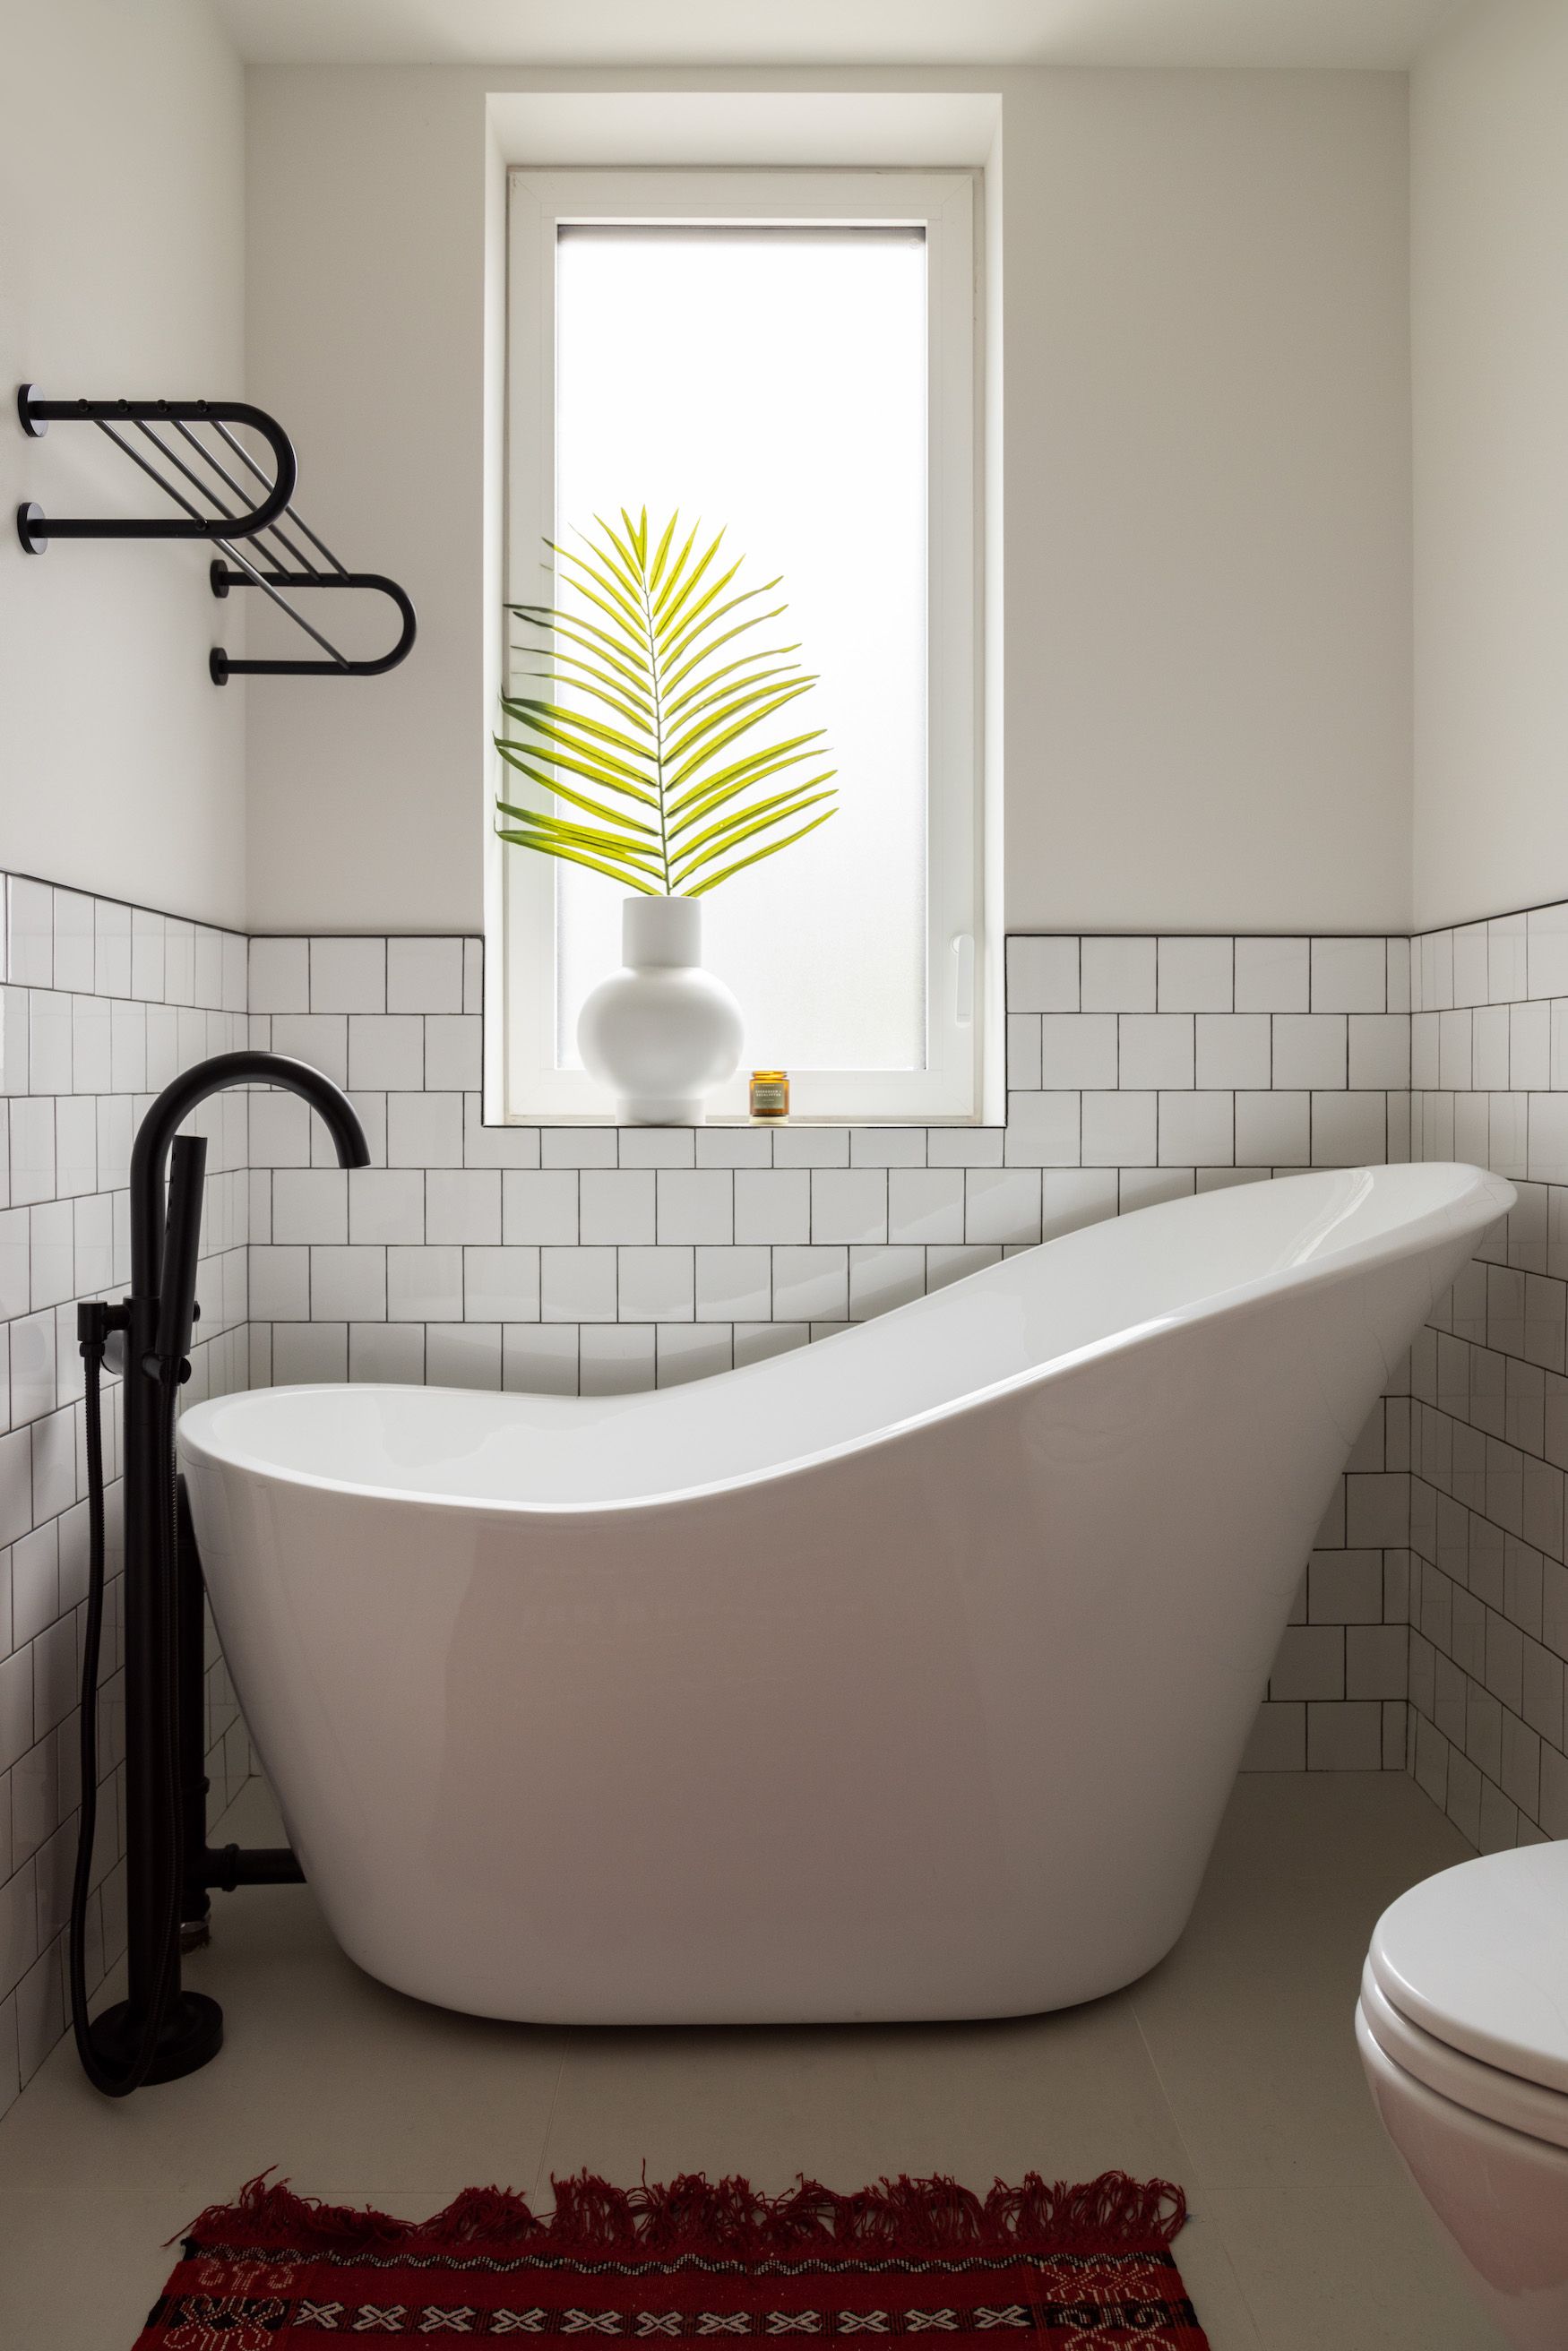 60 Small Bathroom Ideas & Make It Look Bigger - The Nordroom